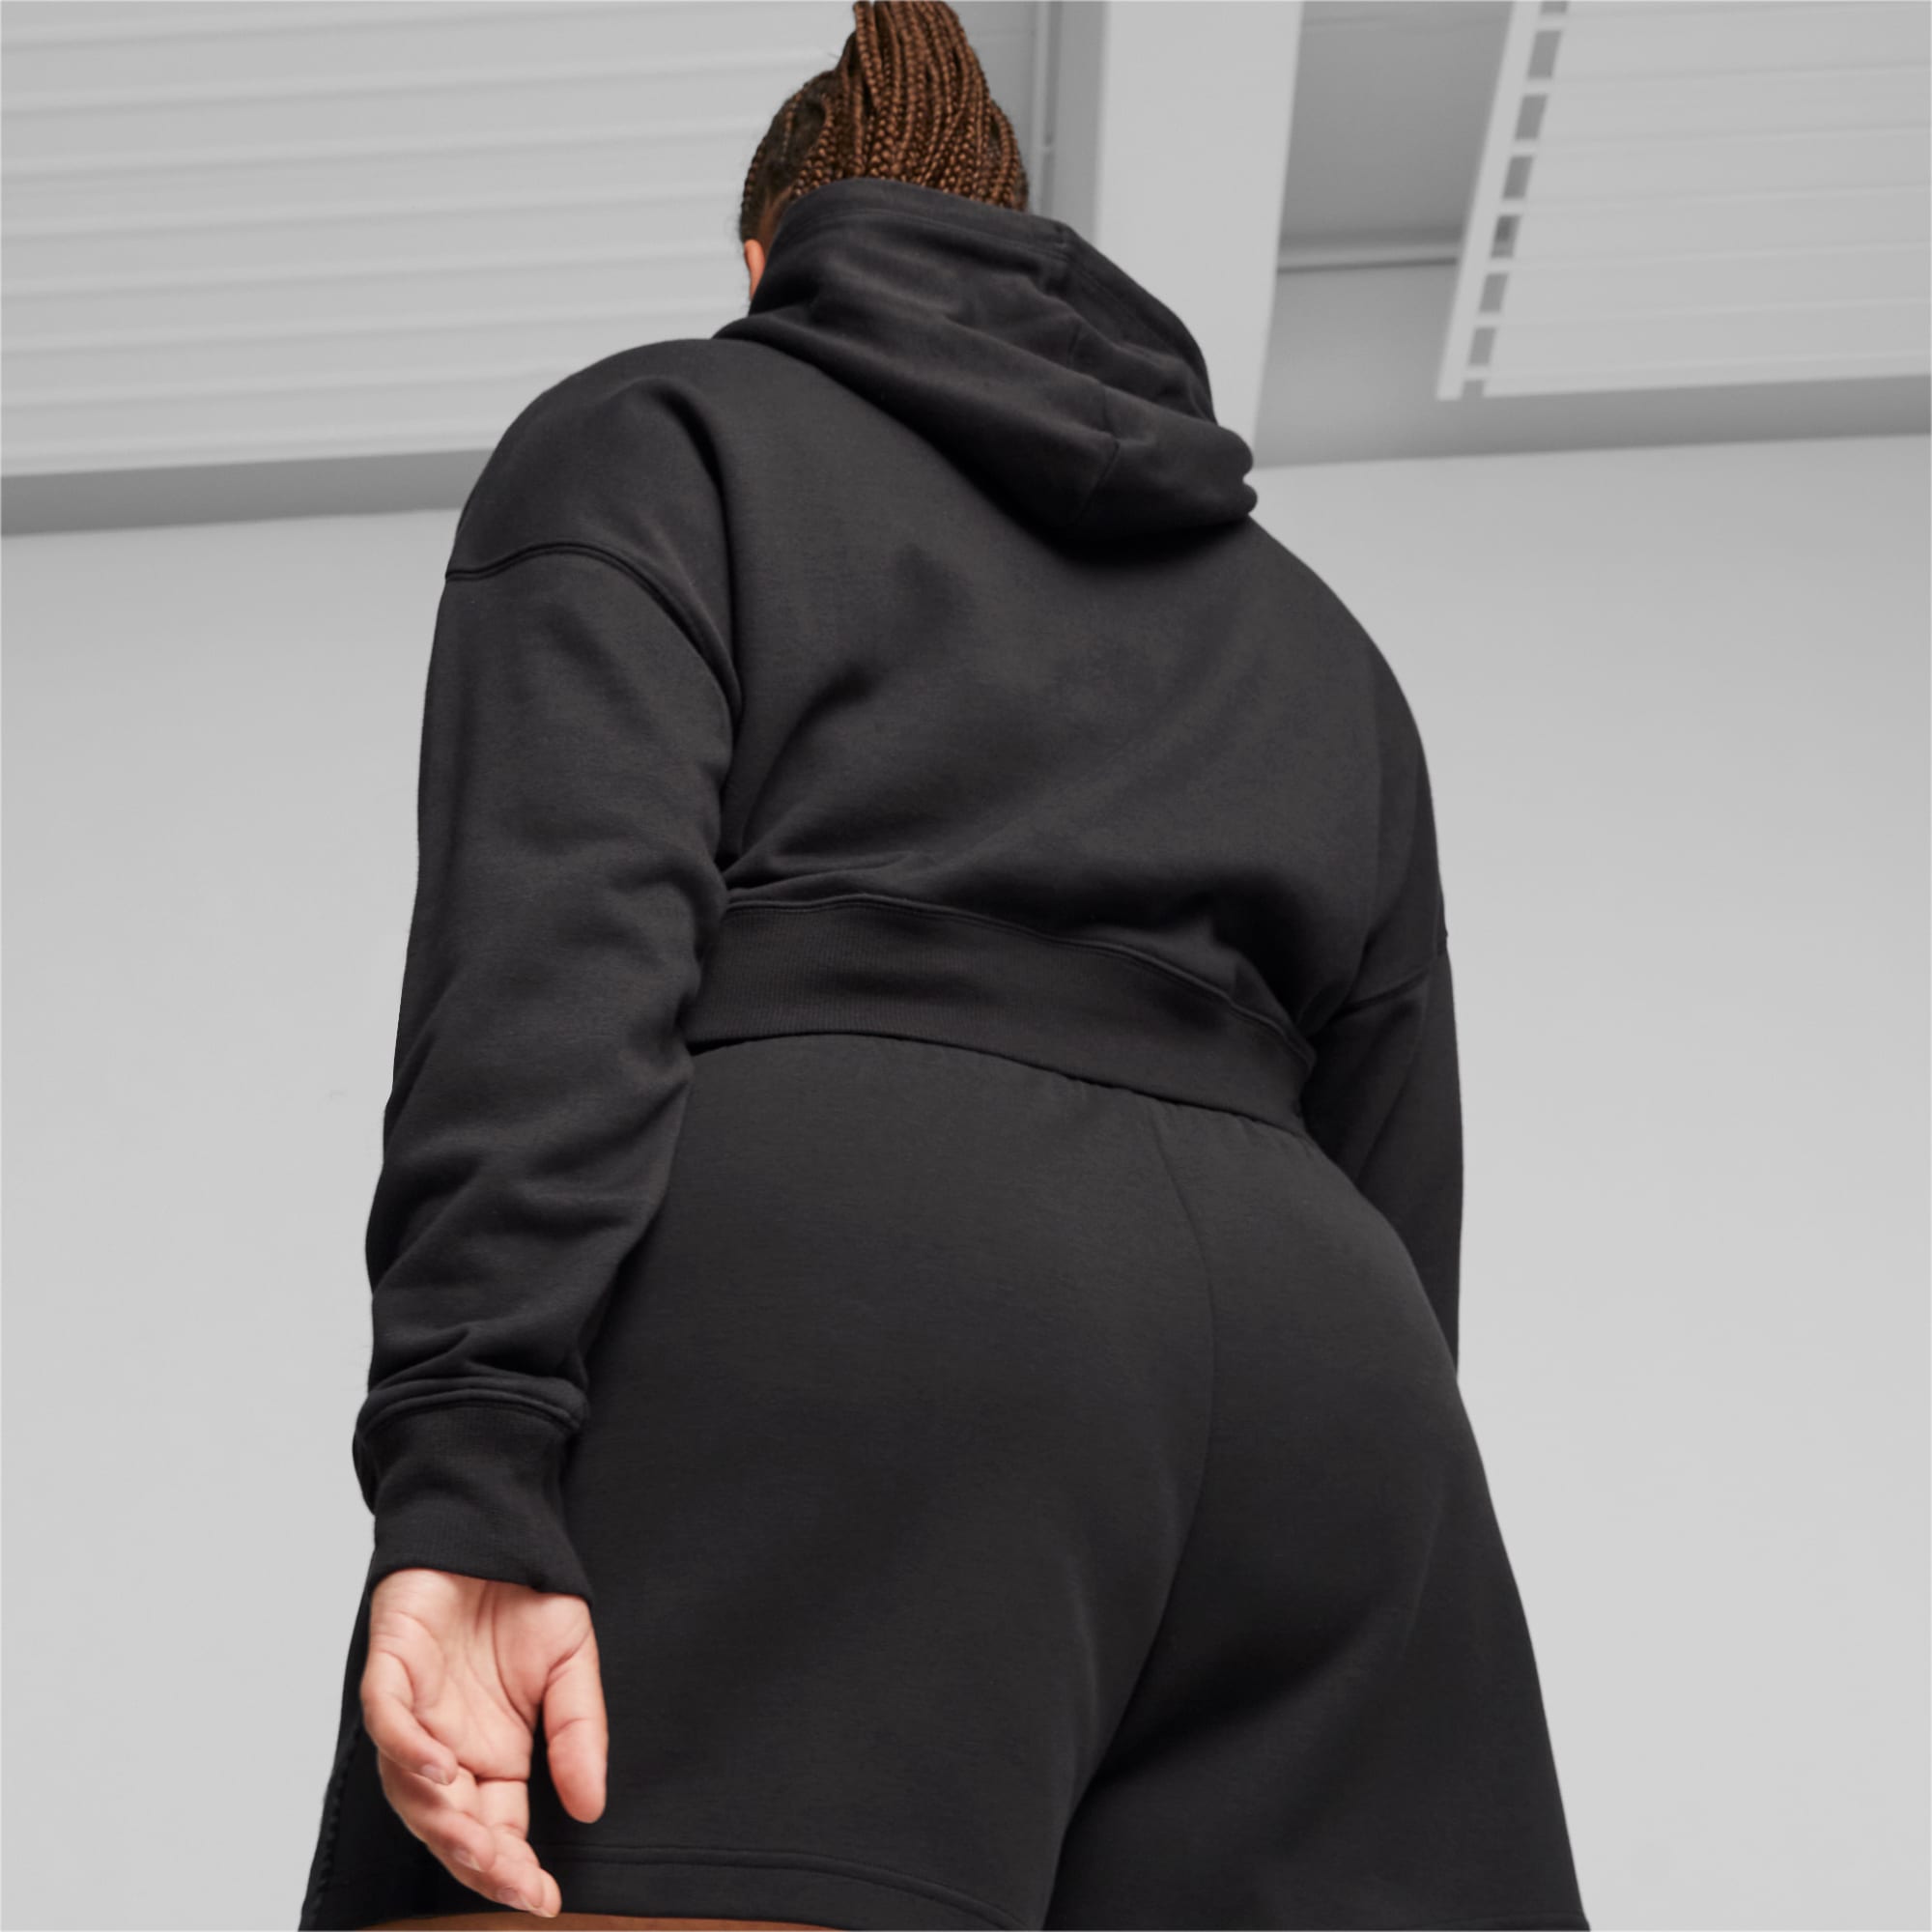 PUMA Classics Women's Cropped Hoodie, Black, Size M, Clothing